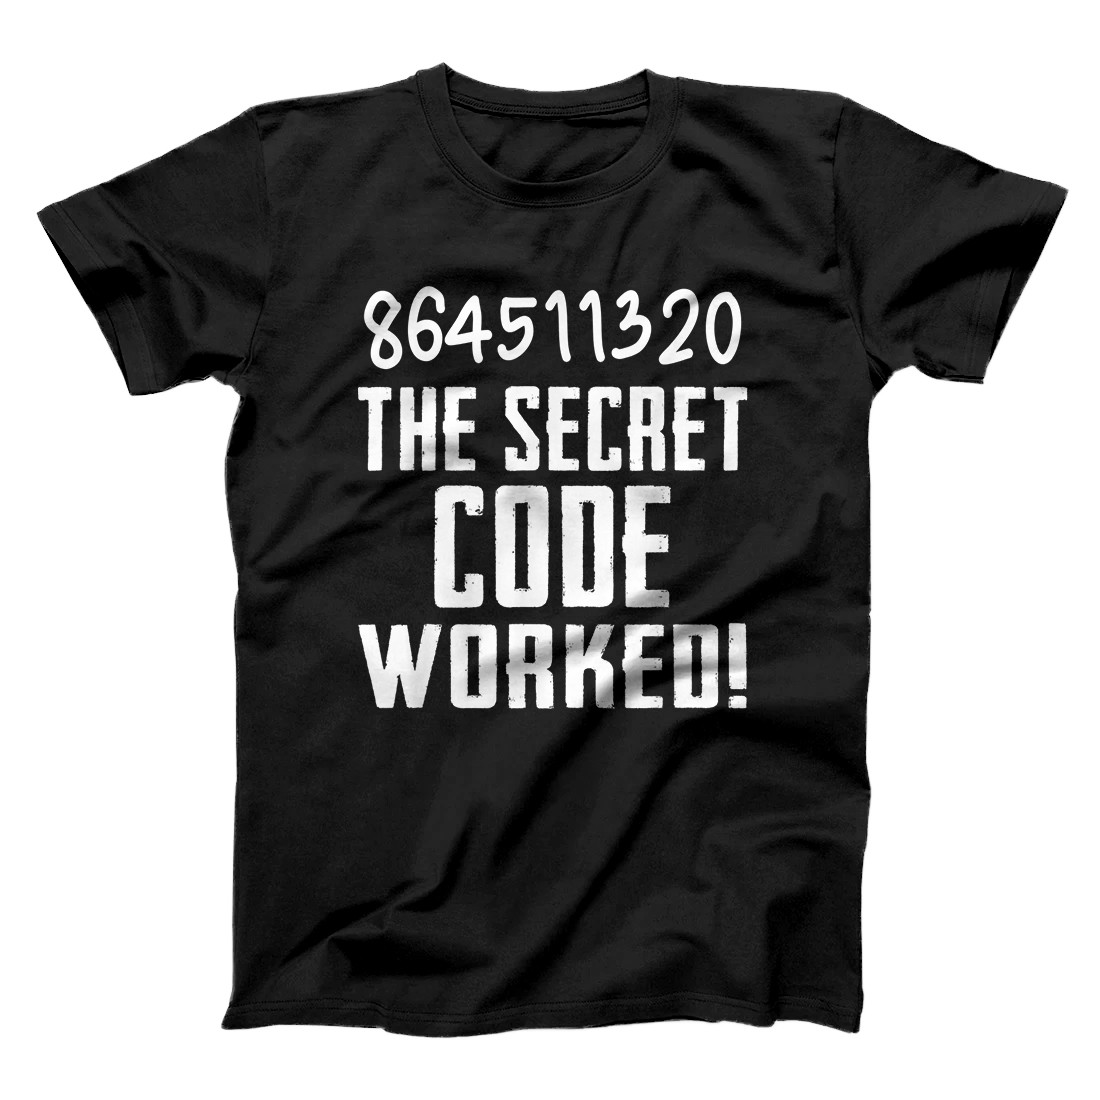 Personalized 864511320 The Secret Code Worked! Trump Lost Biden Won T-Shirt